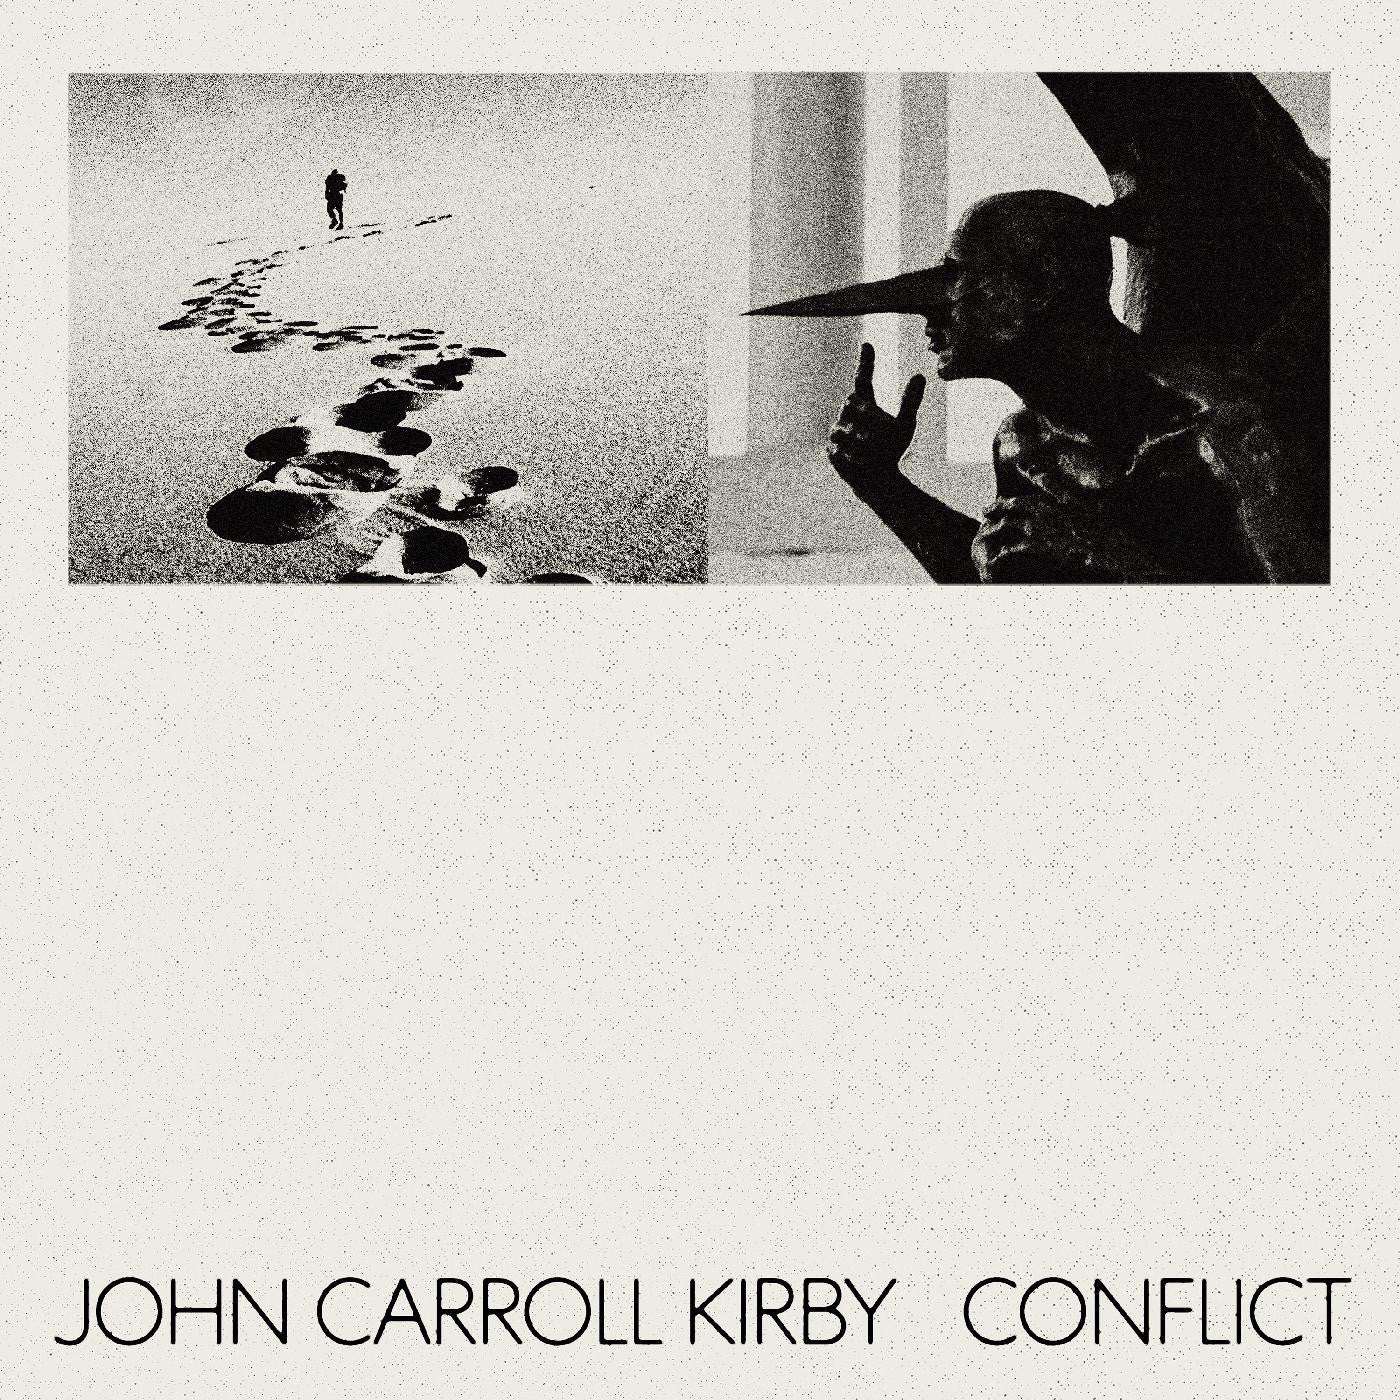 John Carroll Kirby - Conflict